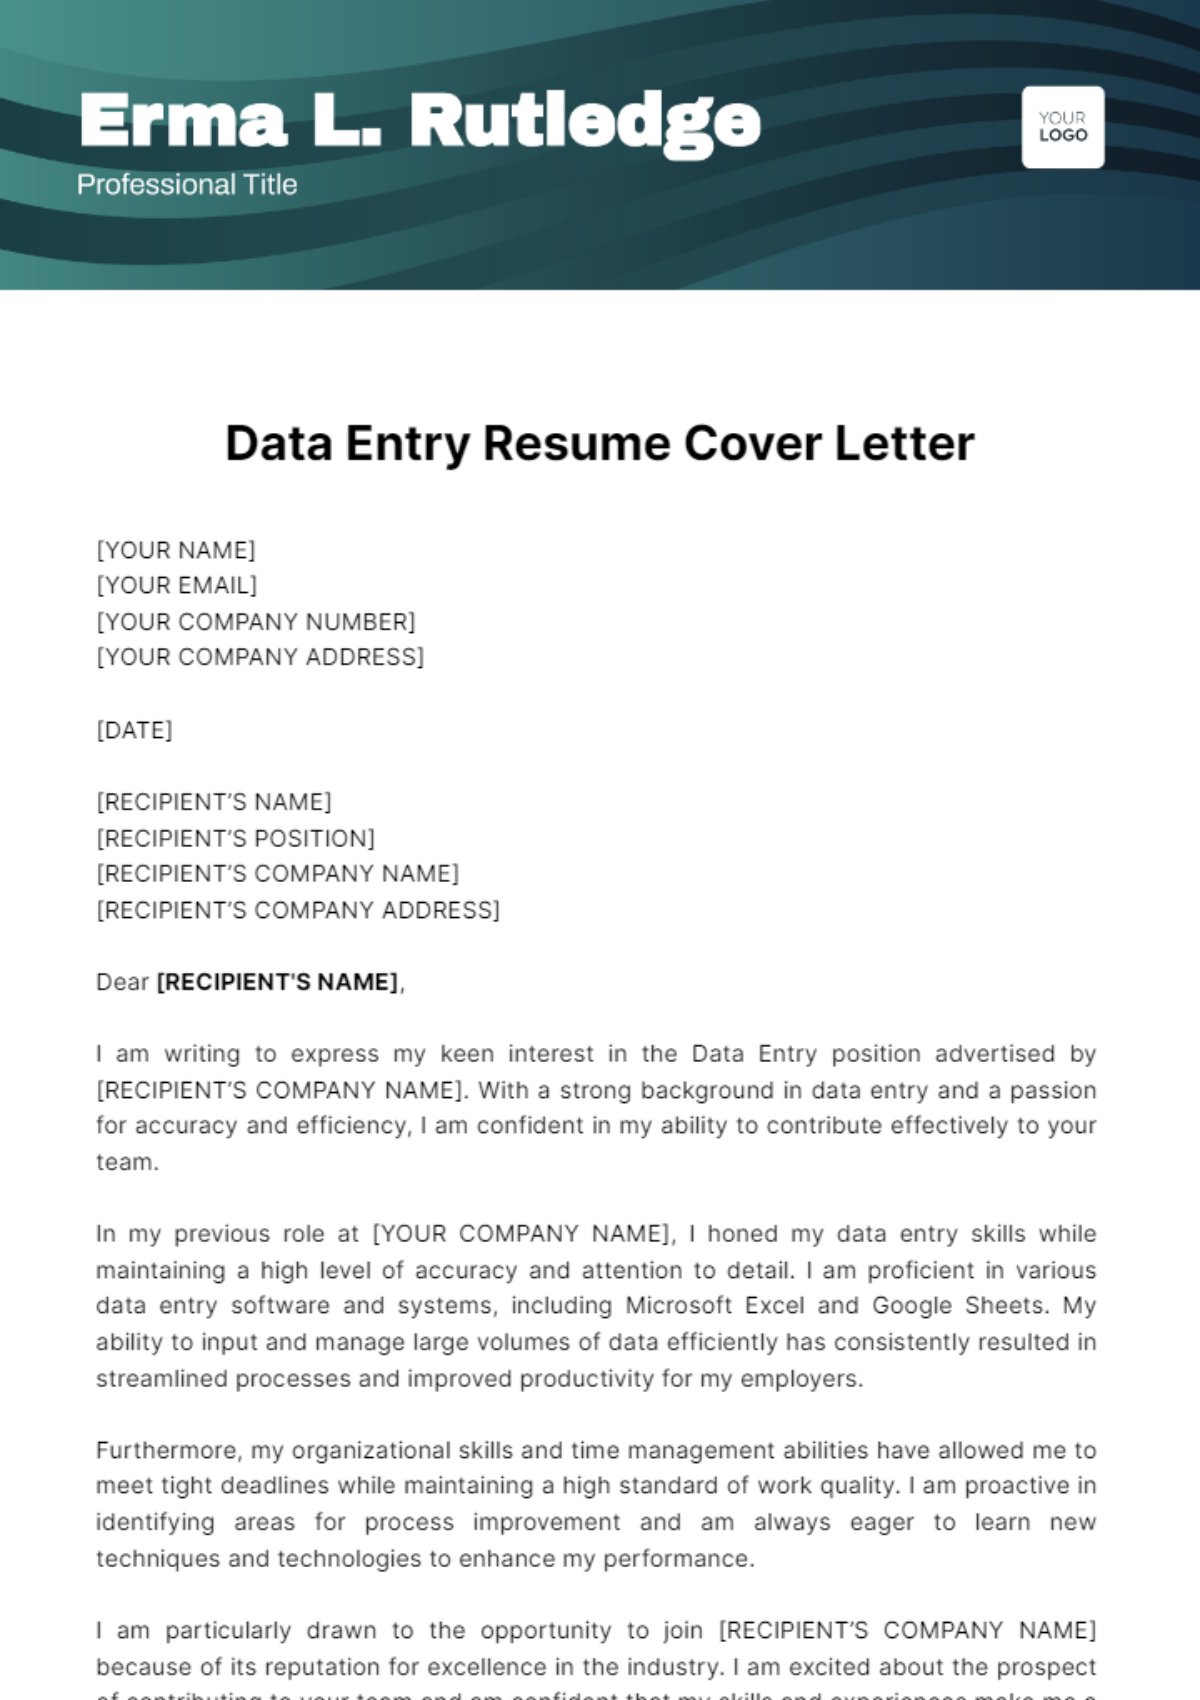 Data Entry Resume Cover Letter Template